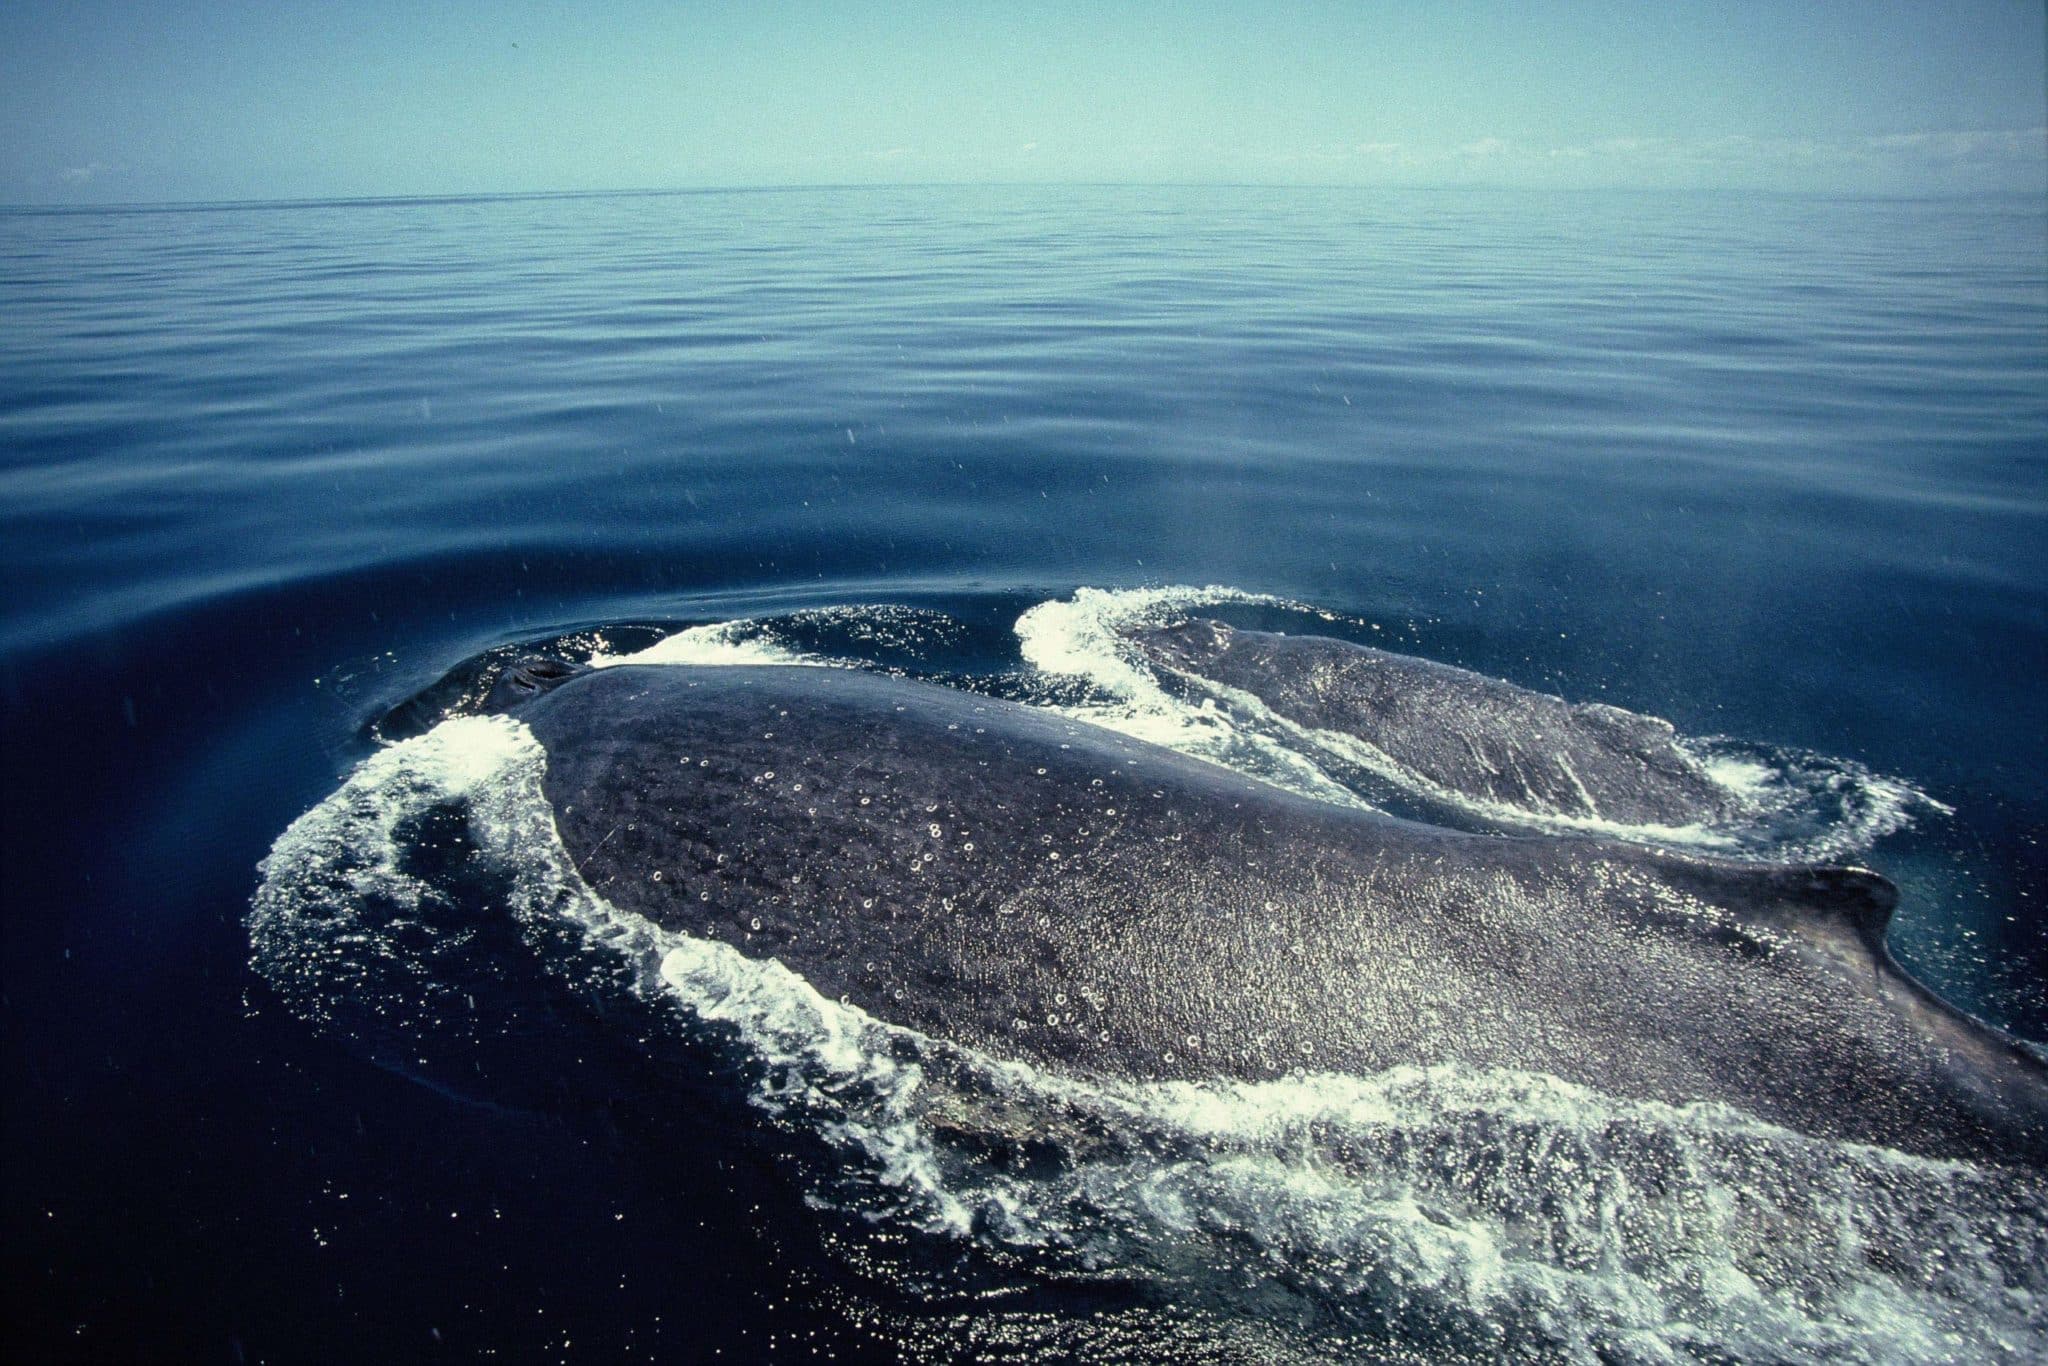 Baleine-et-baleineau-navigation-dmc-madagascar